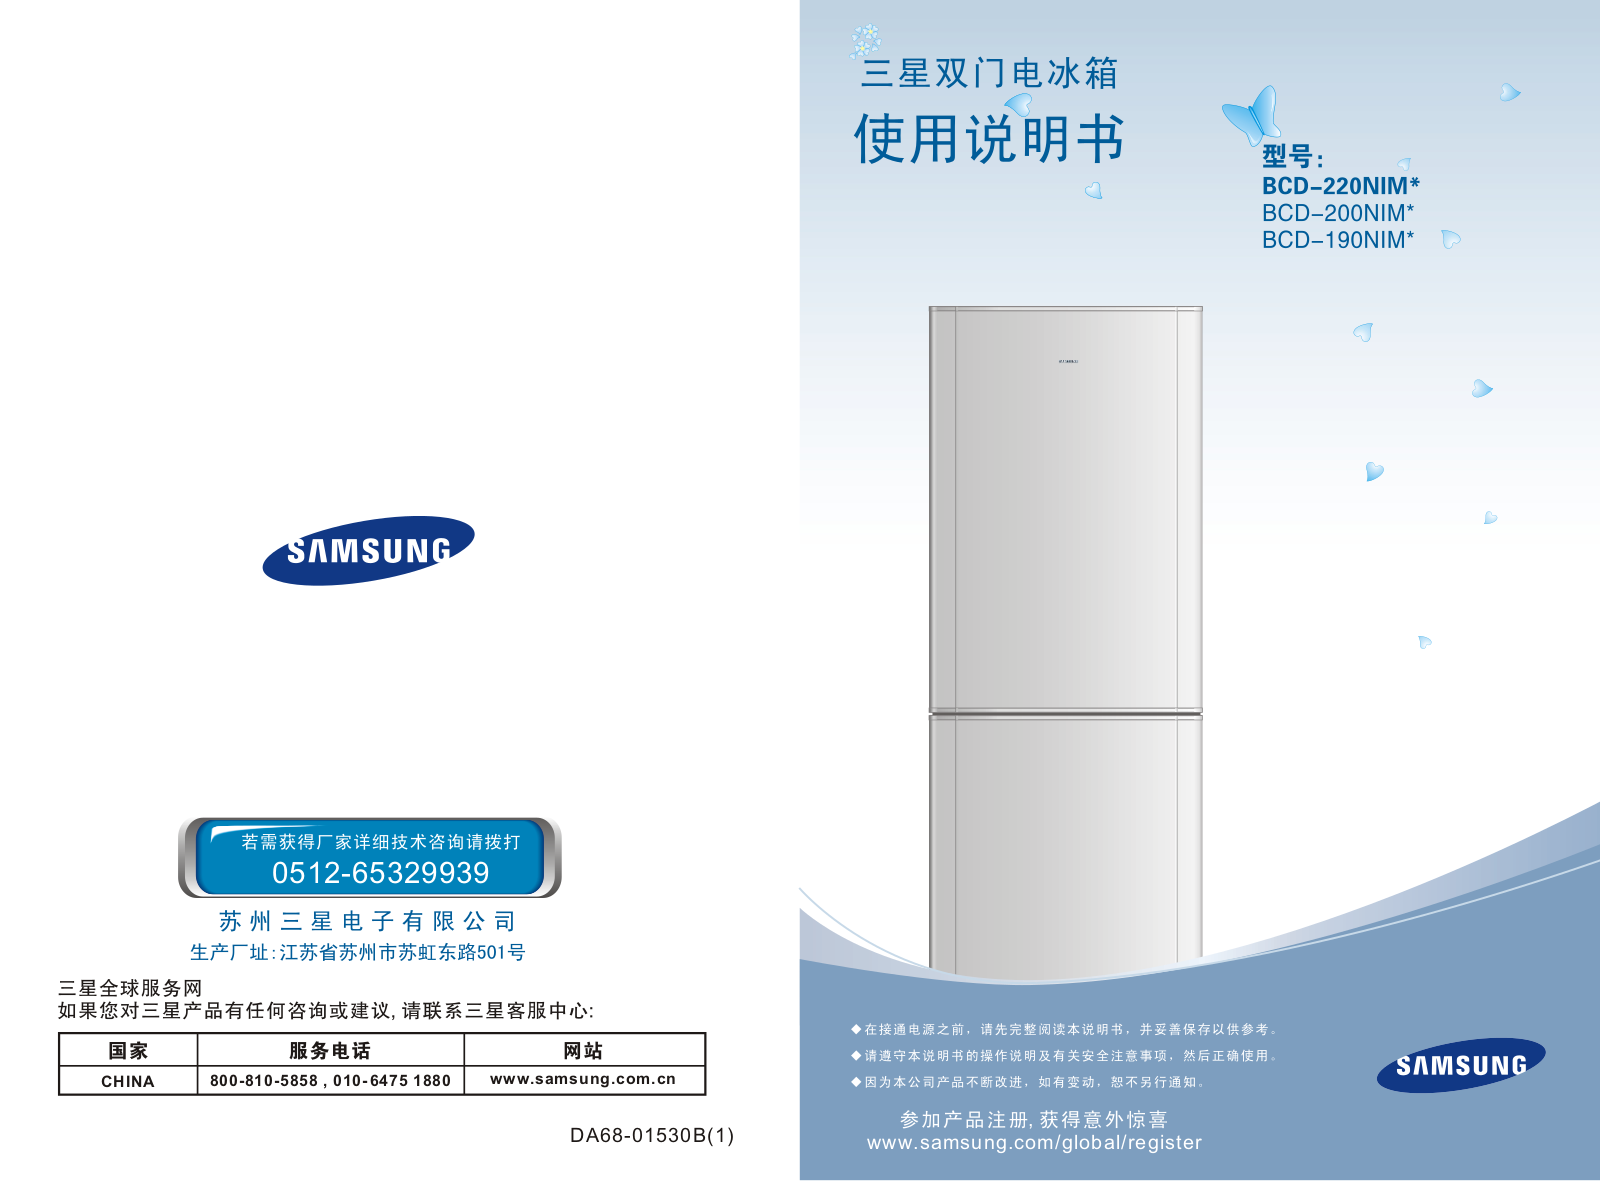 Samsung BCD-200NIMS, BCD-190NIMS, BCD-220NIMS Manual